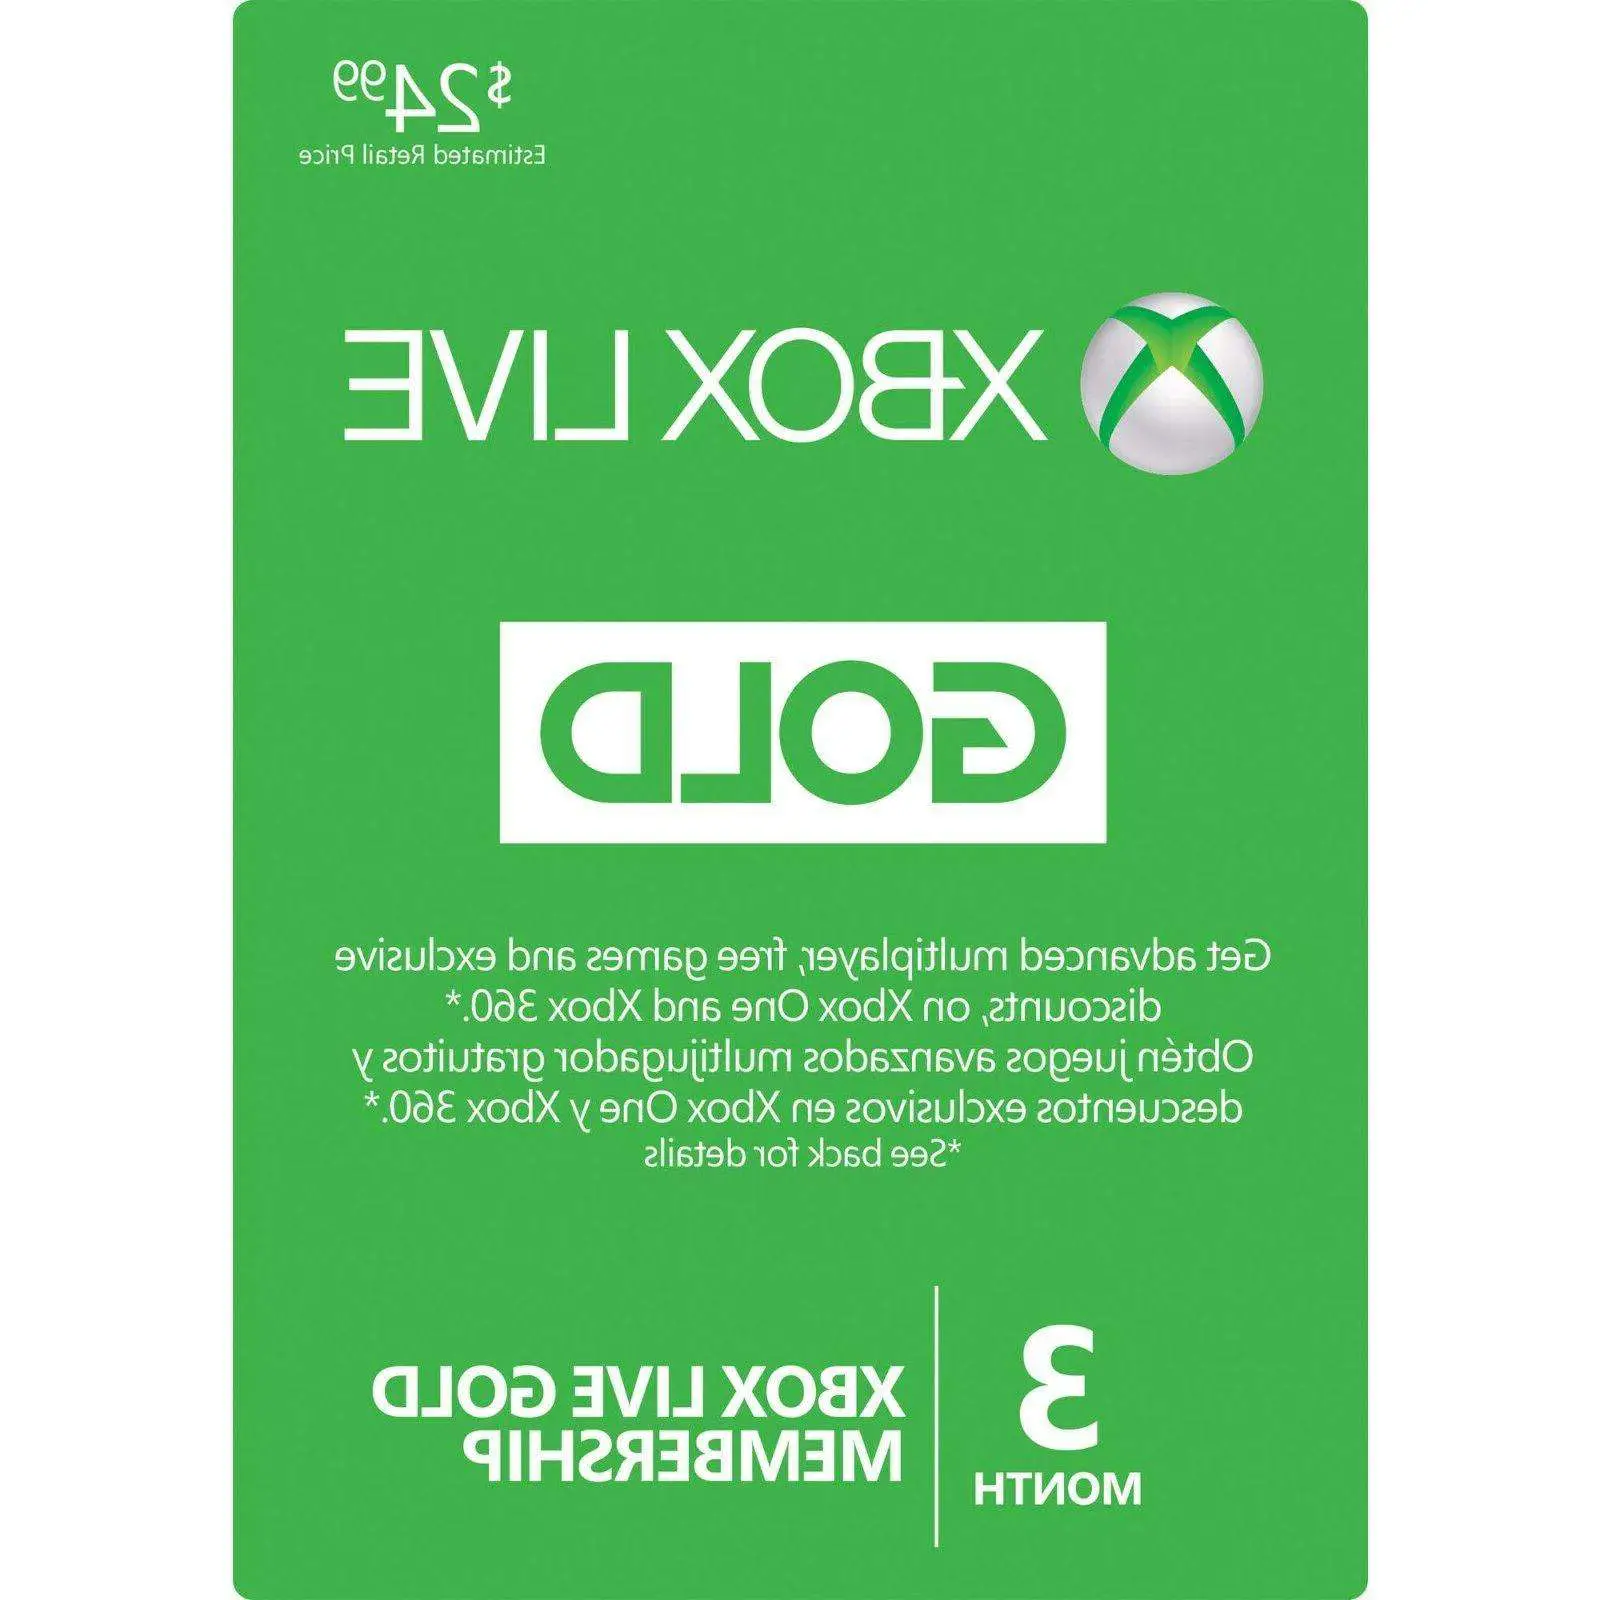 Microsoft 3 Month Xbox Live Gold Membership Subscripti